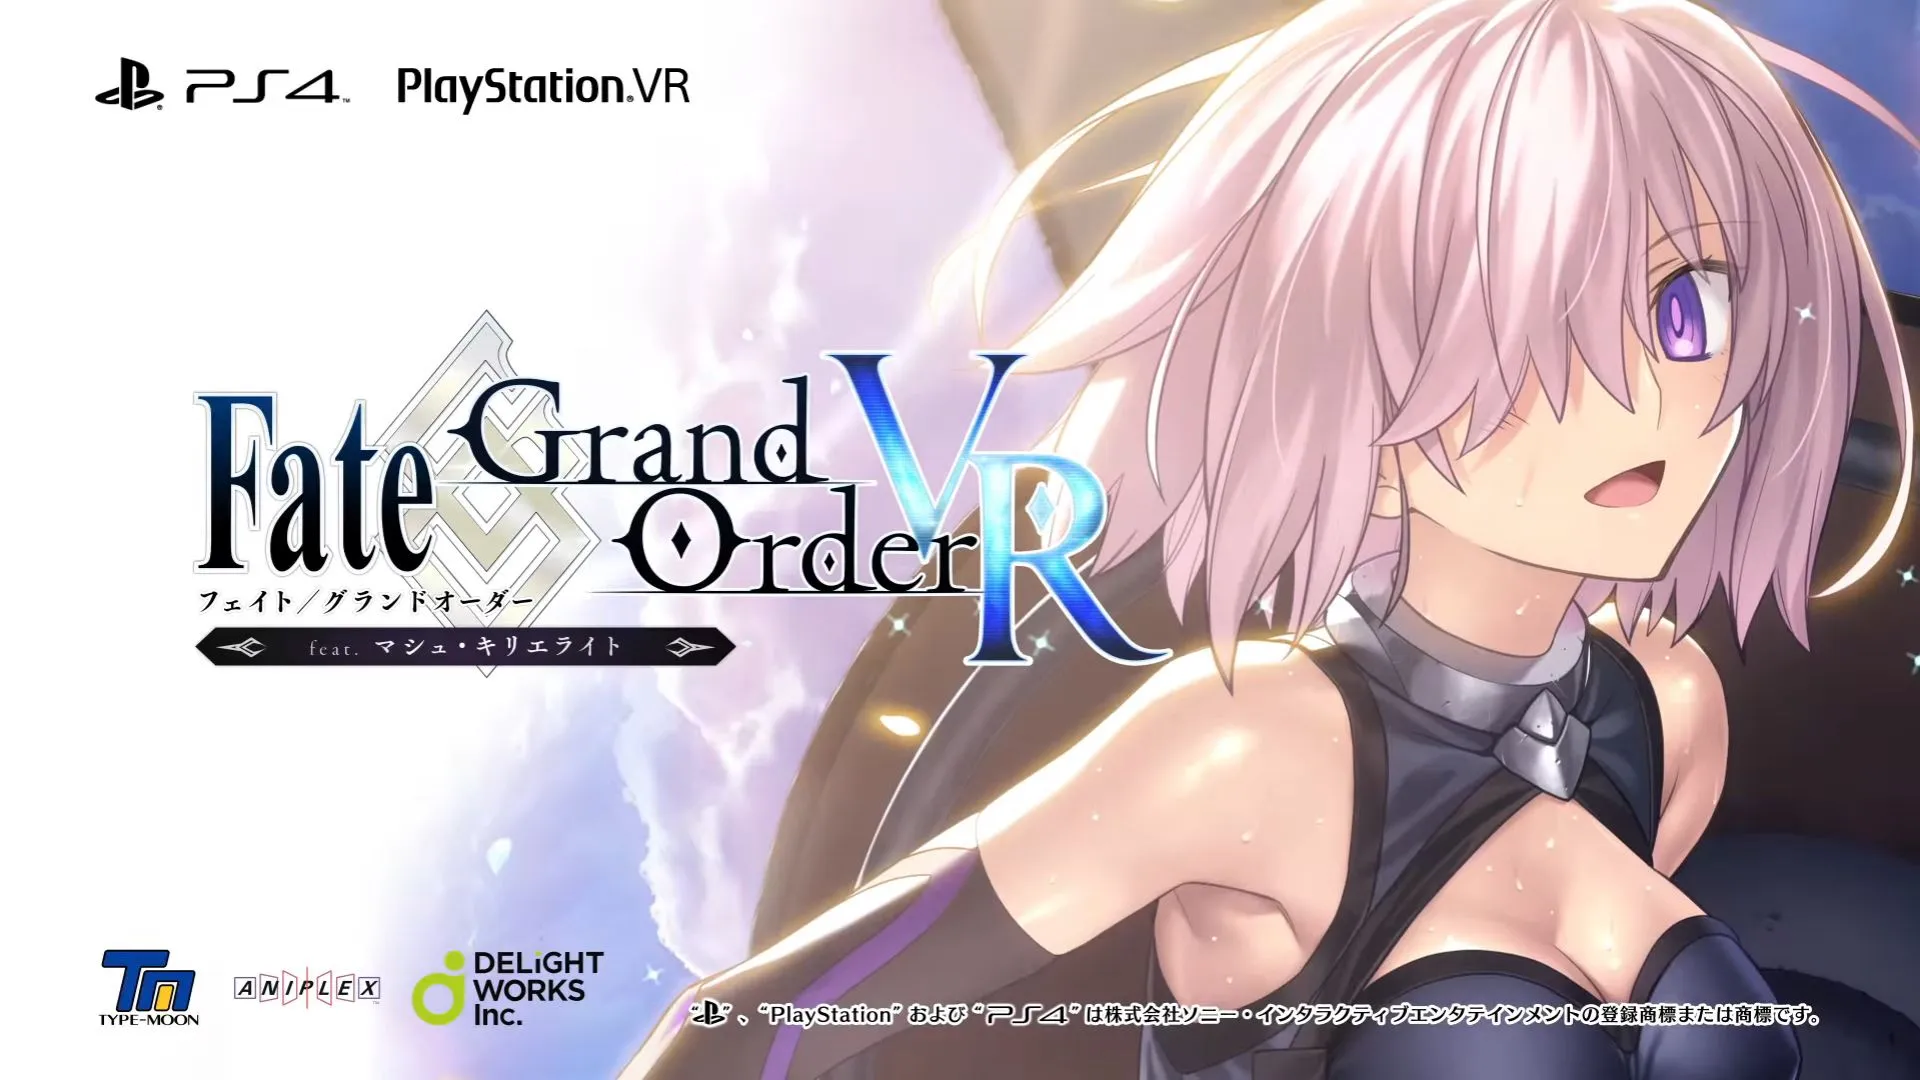 Primer trailer para Fate/Grand Order VR